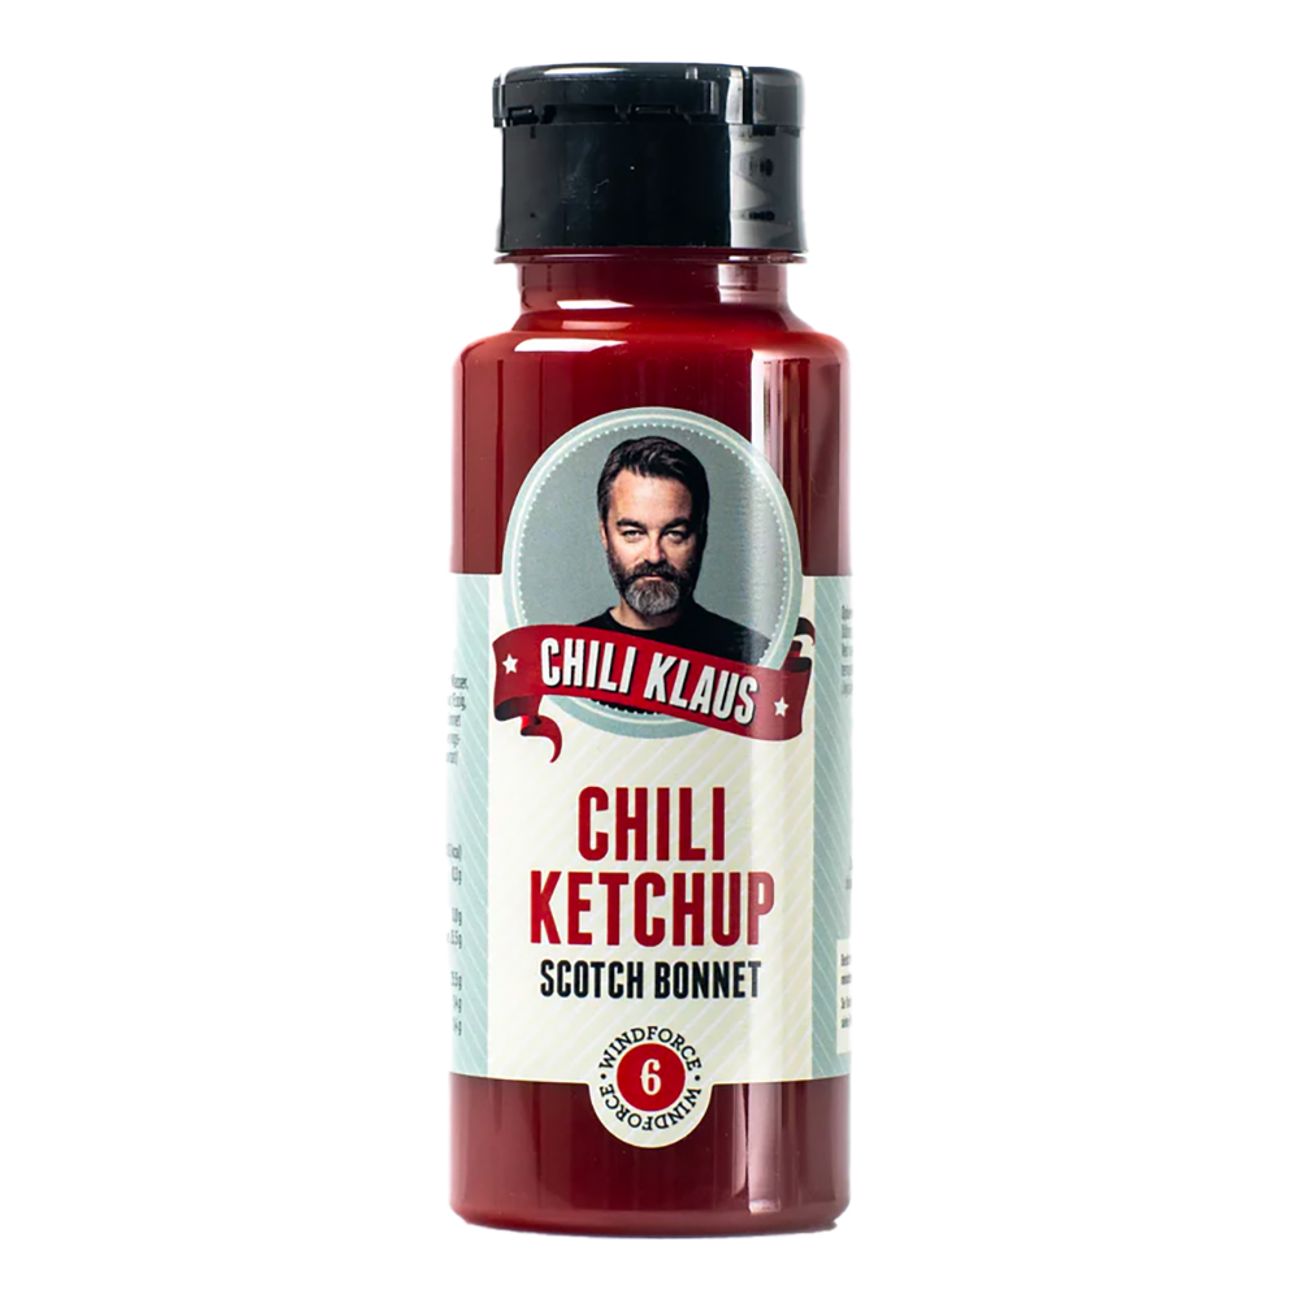 chili-klaus-chili-ketchup-scotch-bonnet-89185-1